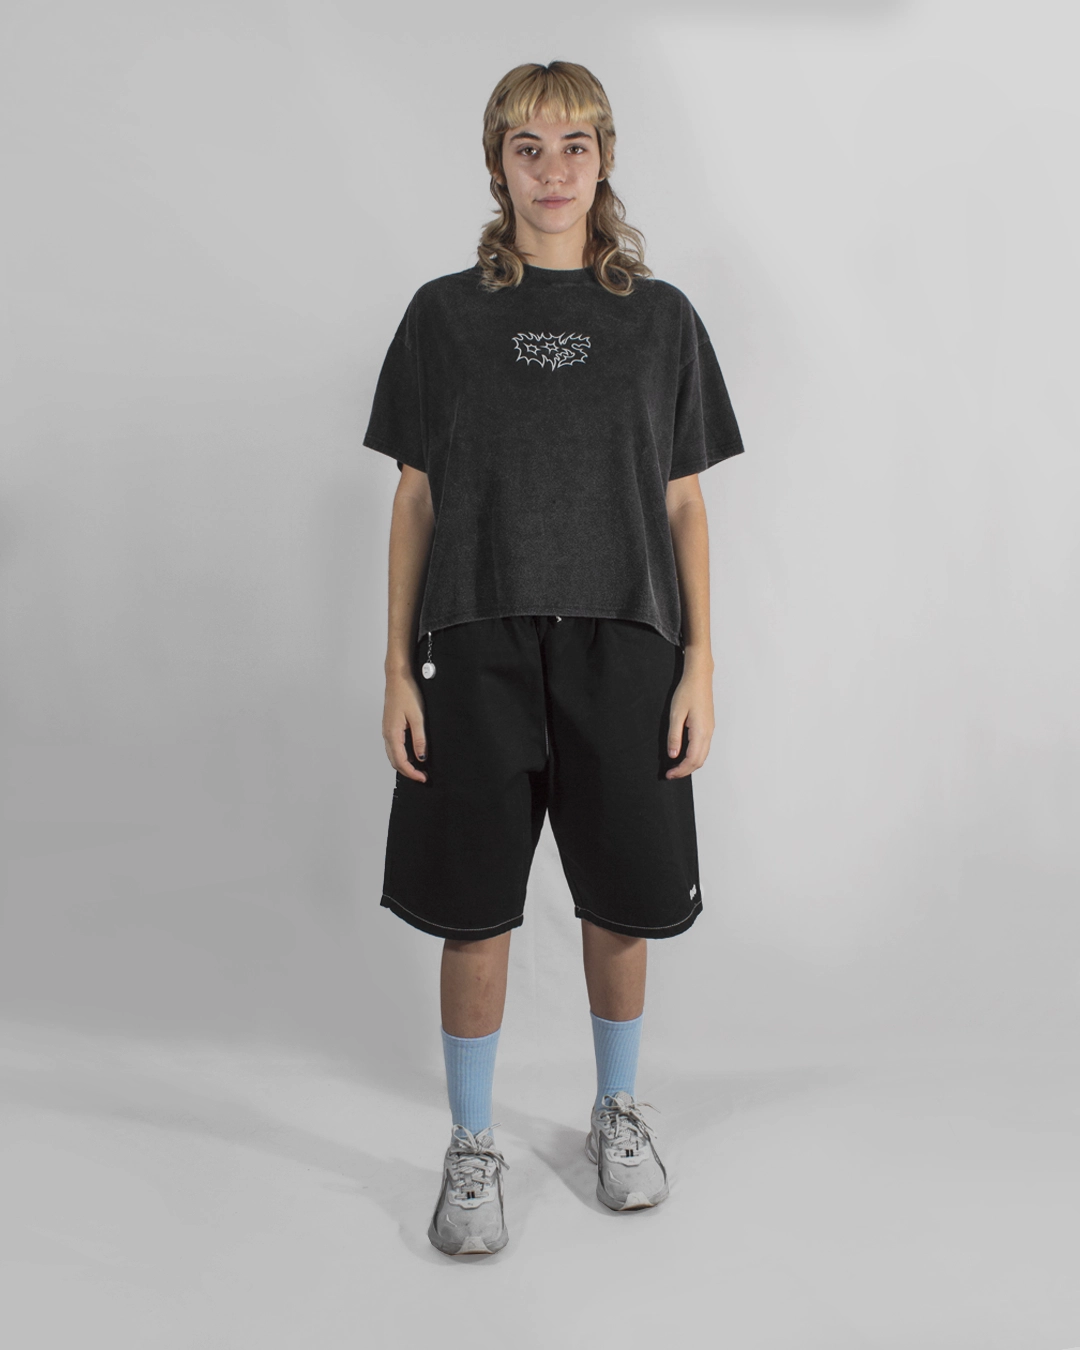 modelo outfit completo remera boxy fit bermuda negra skater urbano ancho